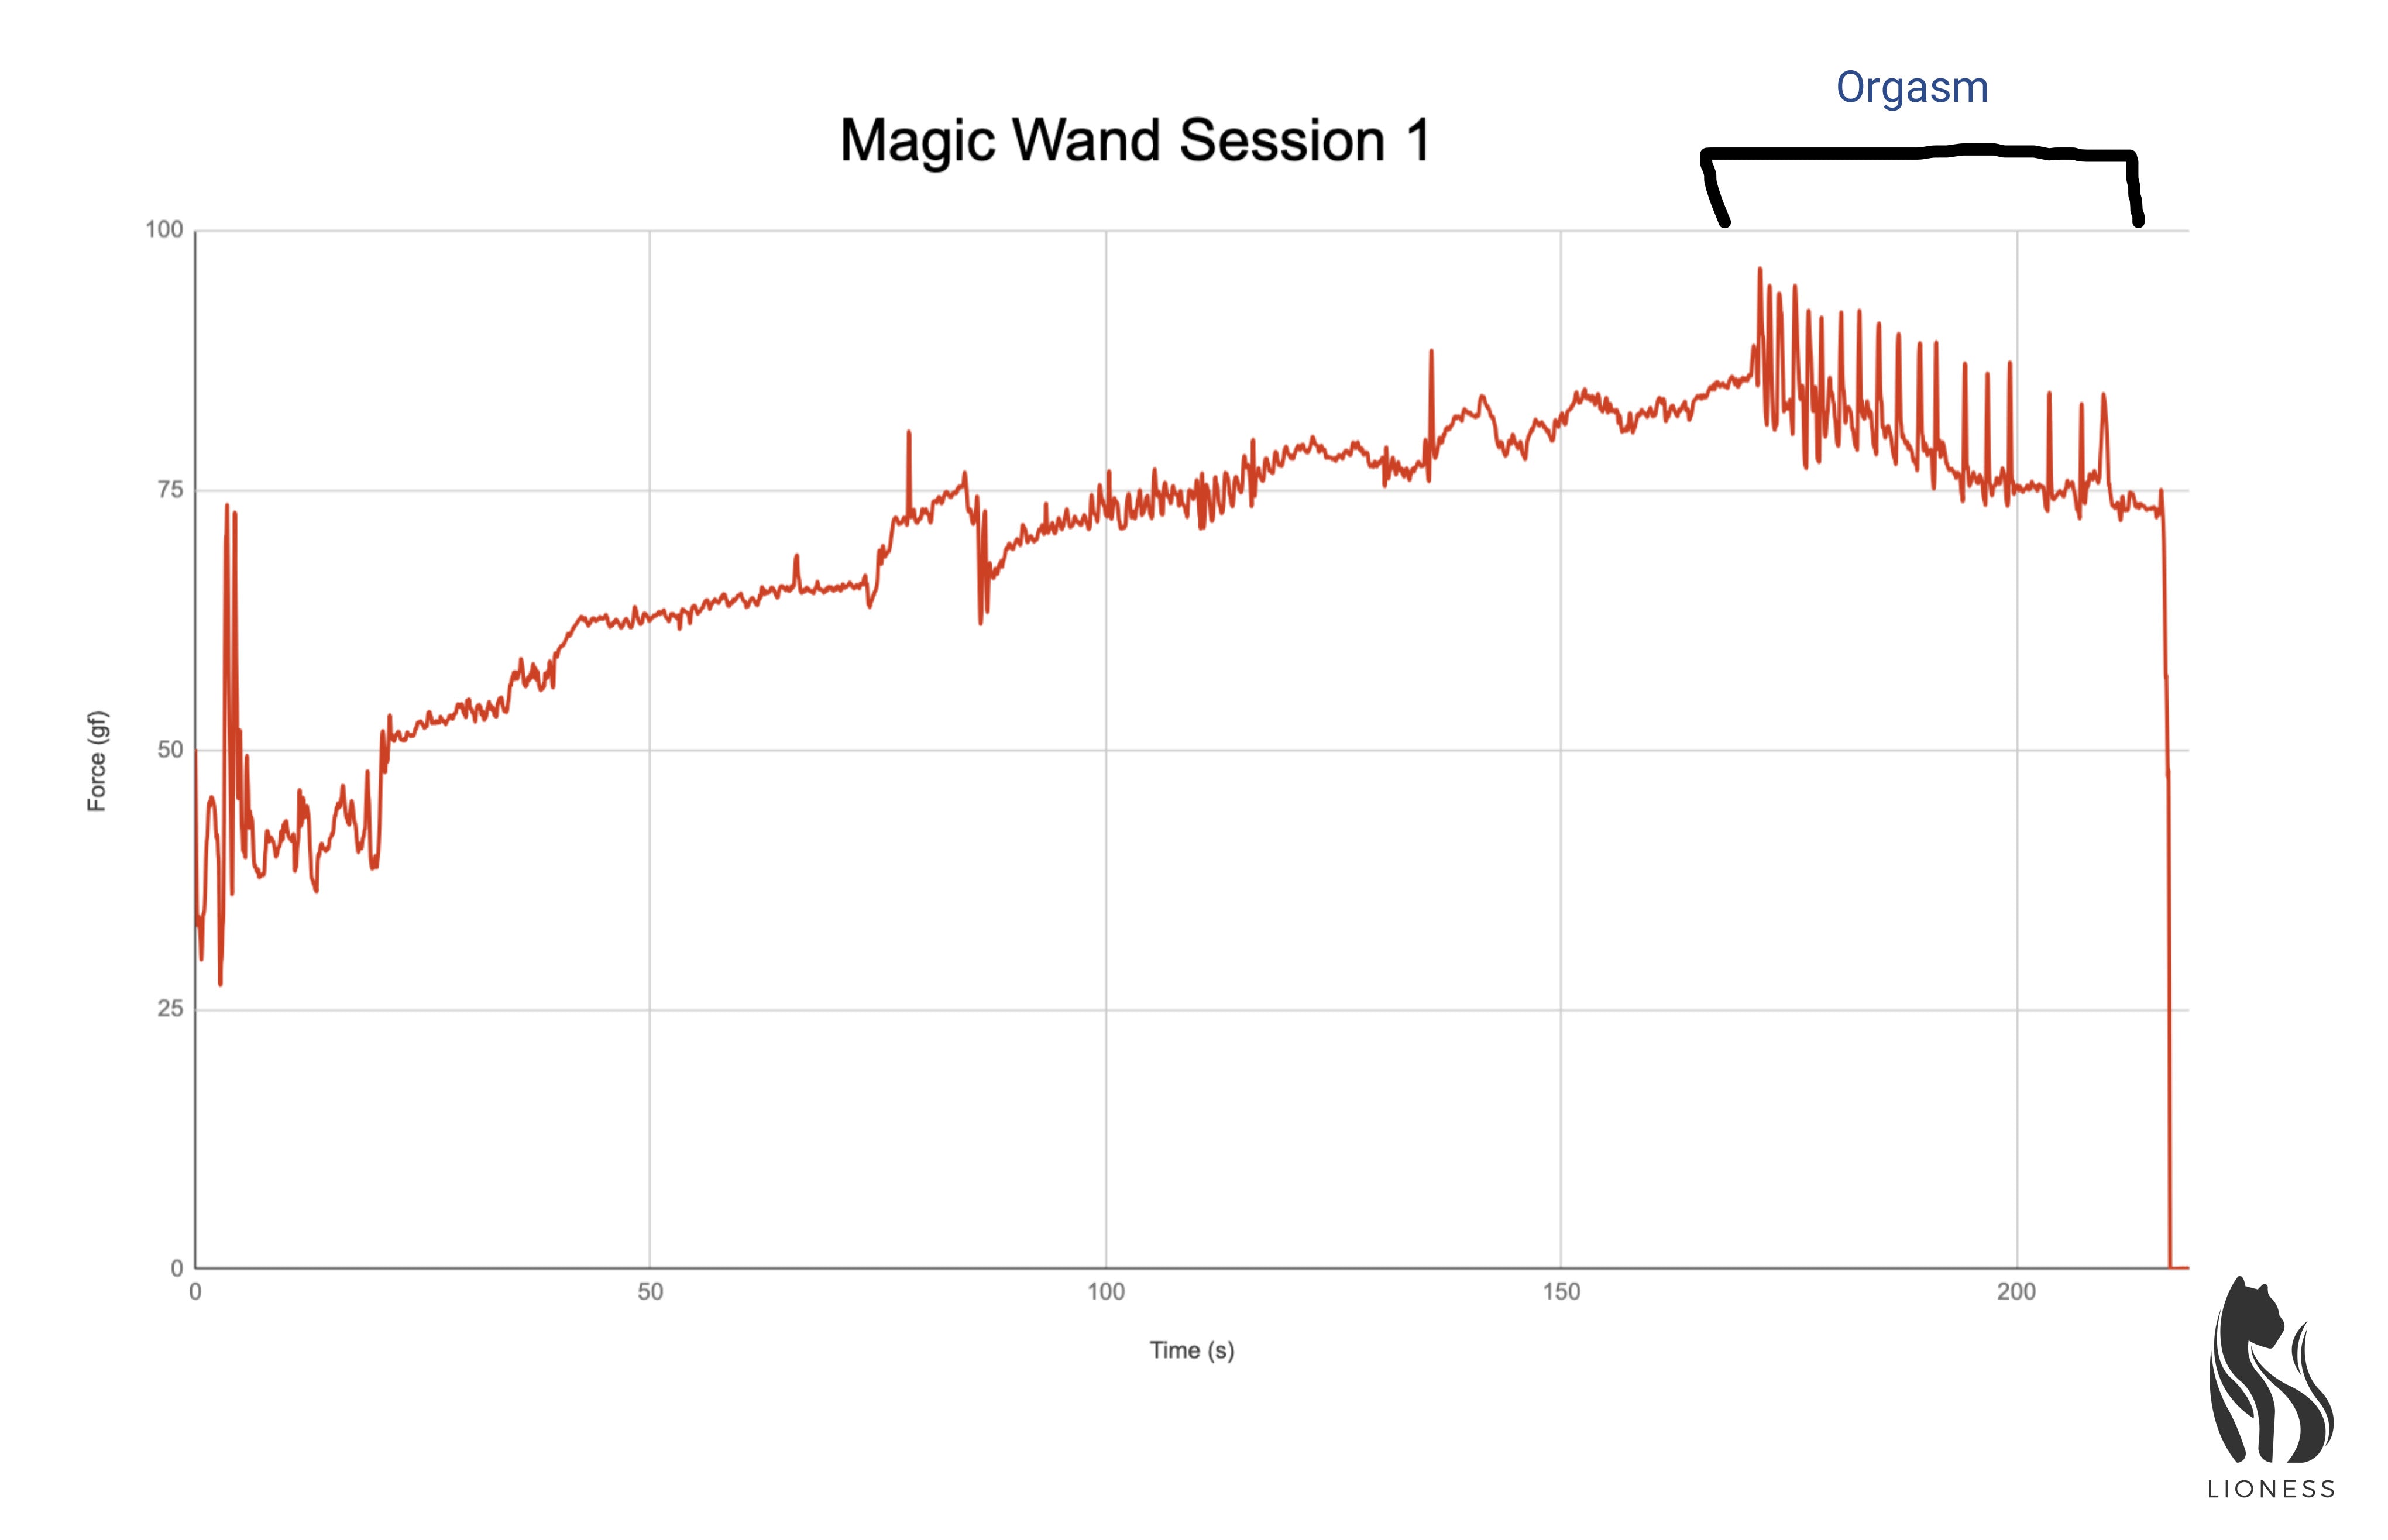 Magic wand session 1 data